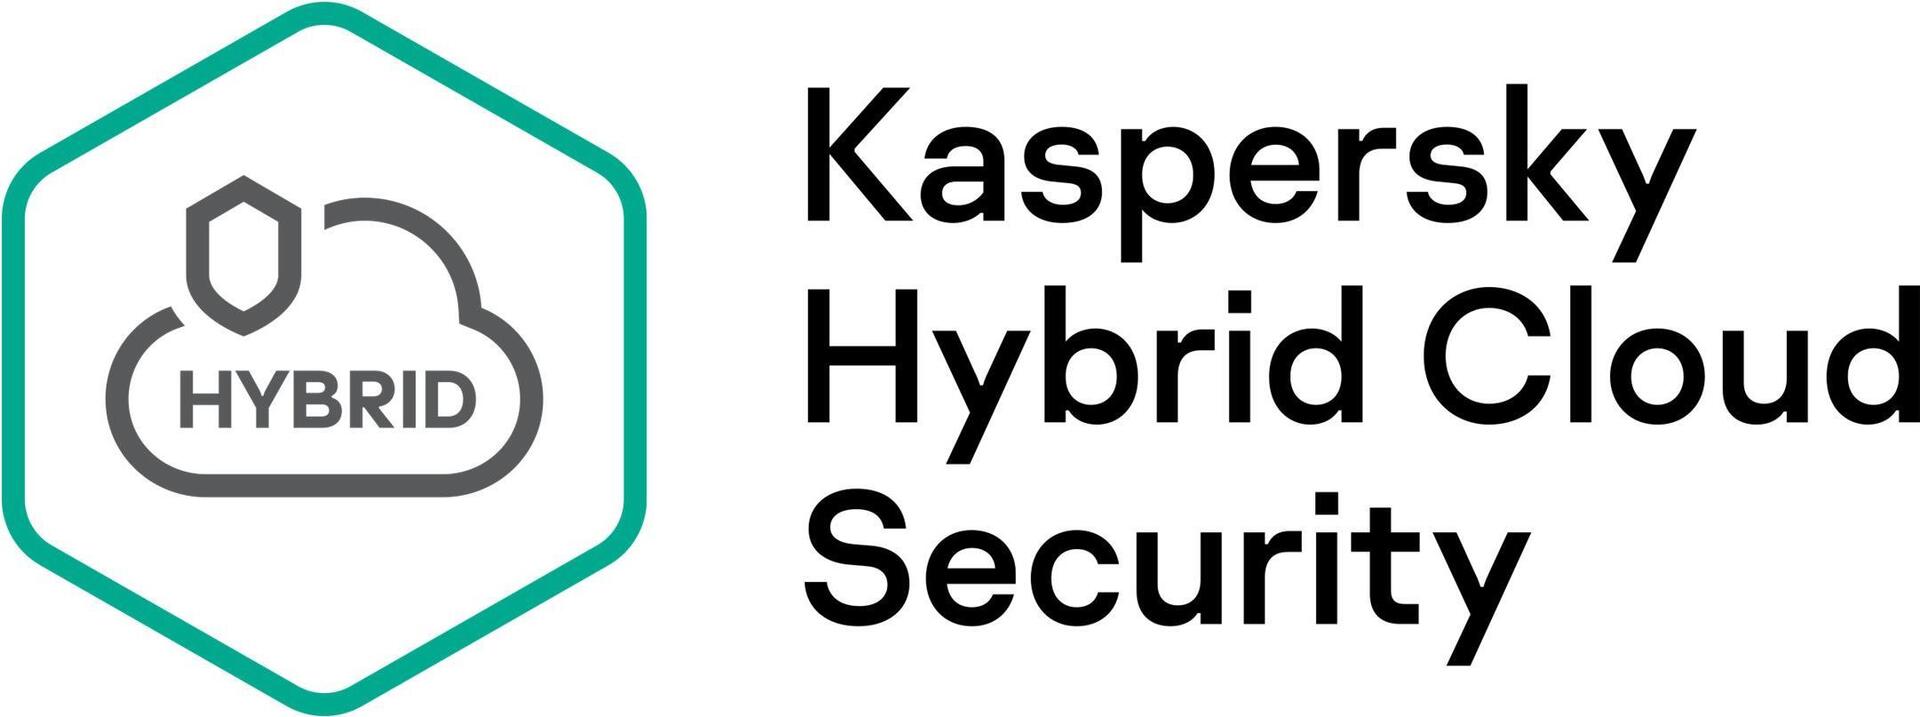 Kaspersky Hybrid Cloud Security Enterprise CPU European Edi. 100-149 CPU 1-Year Renewal License (KL4553XARFR)